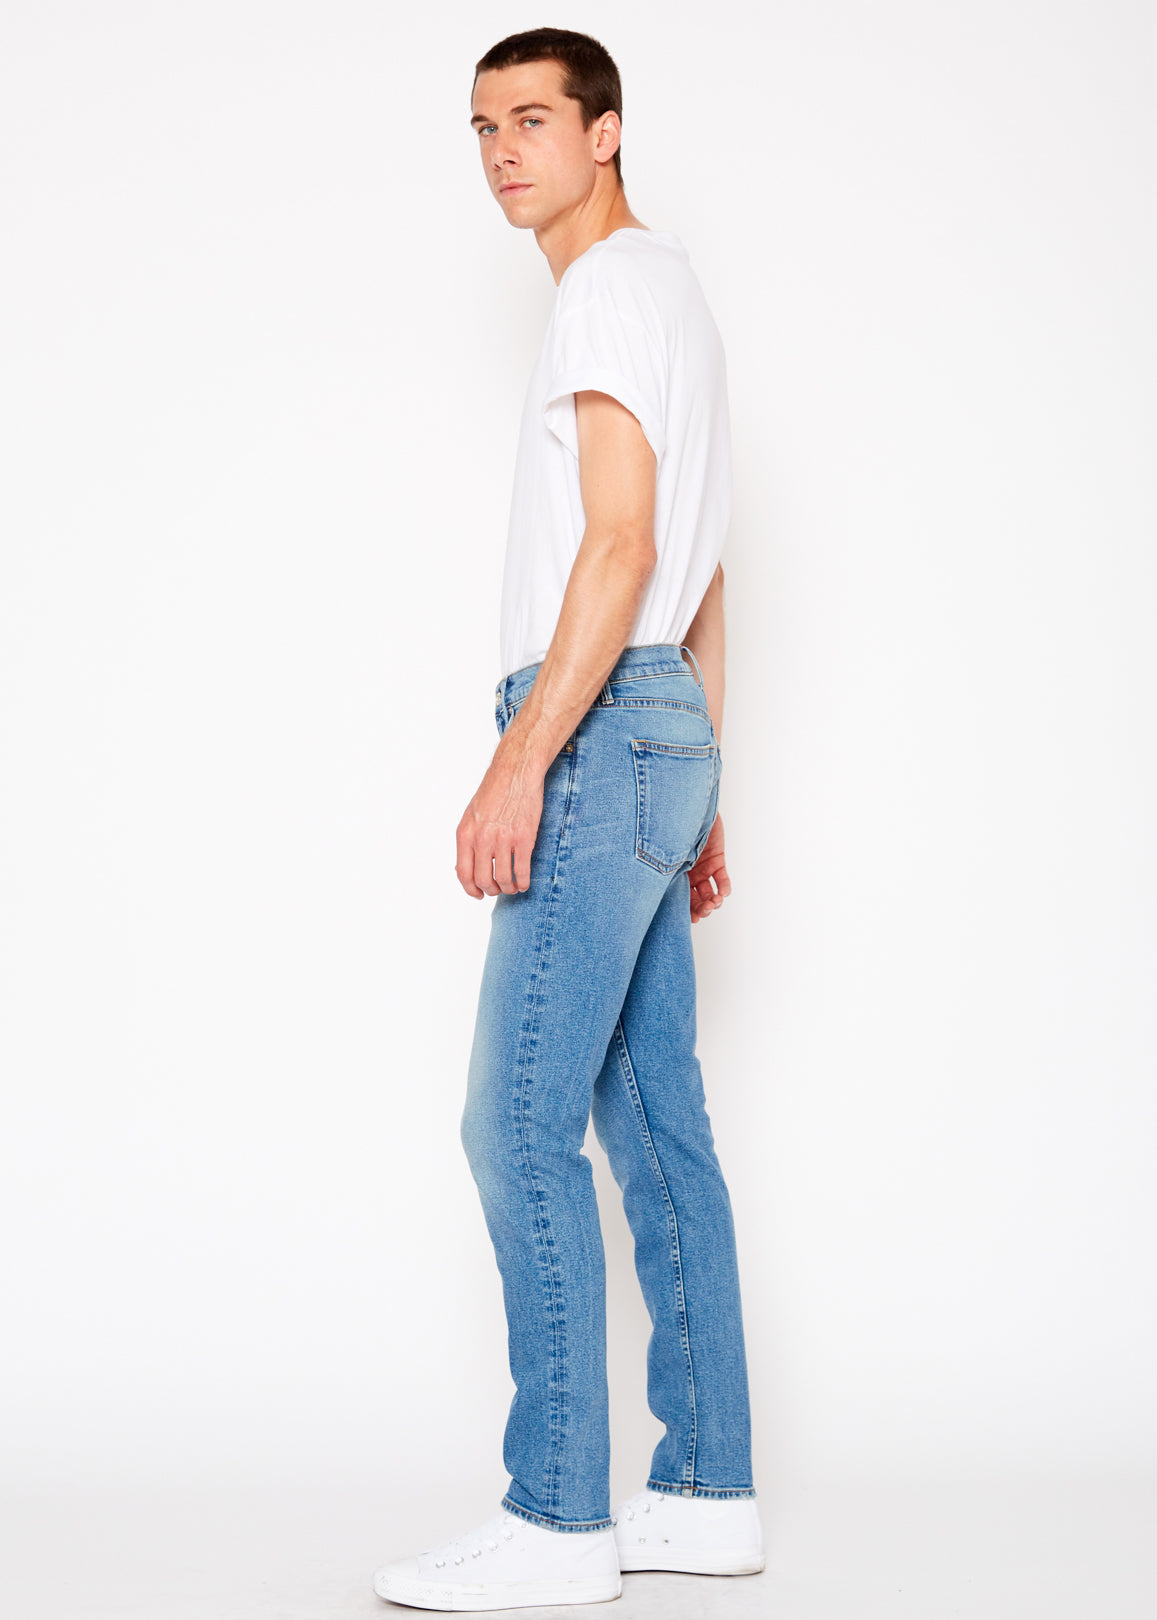 Men's 32 Inseam Harrison Stretch Skinny Jeans In Indigo Blue - Noend Denim